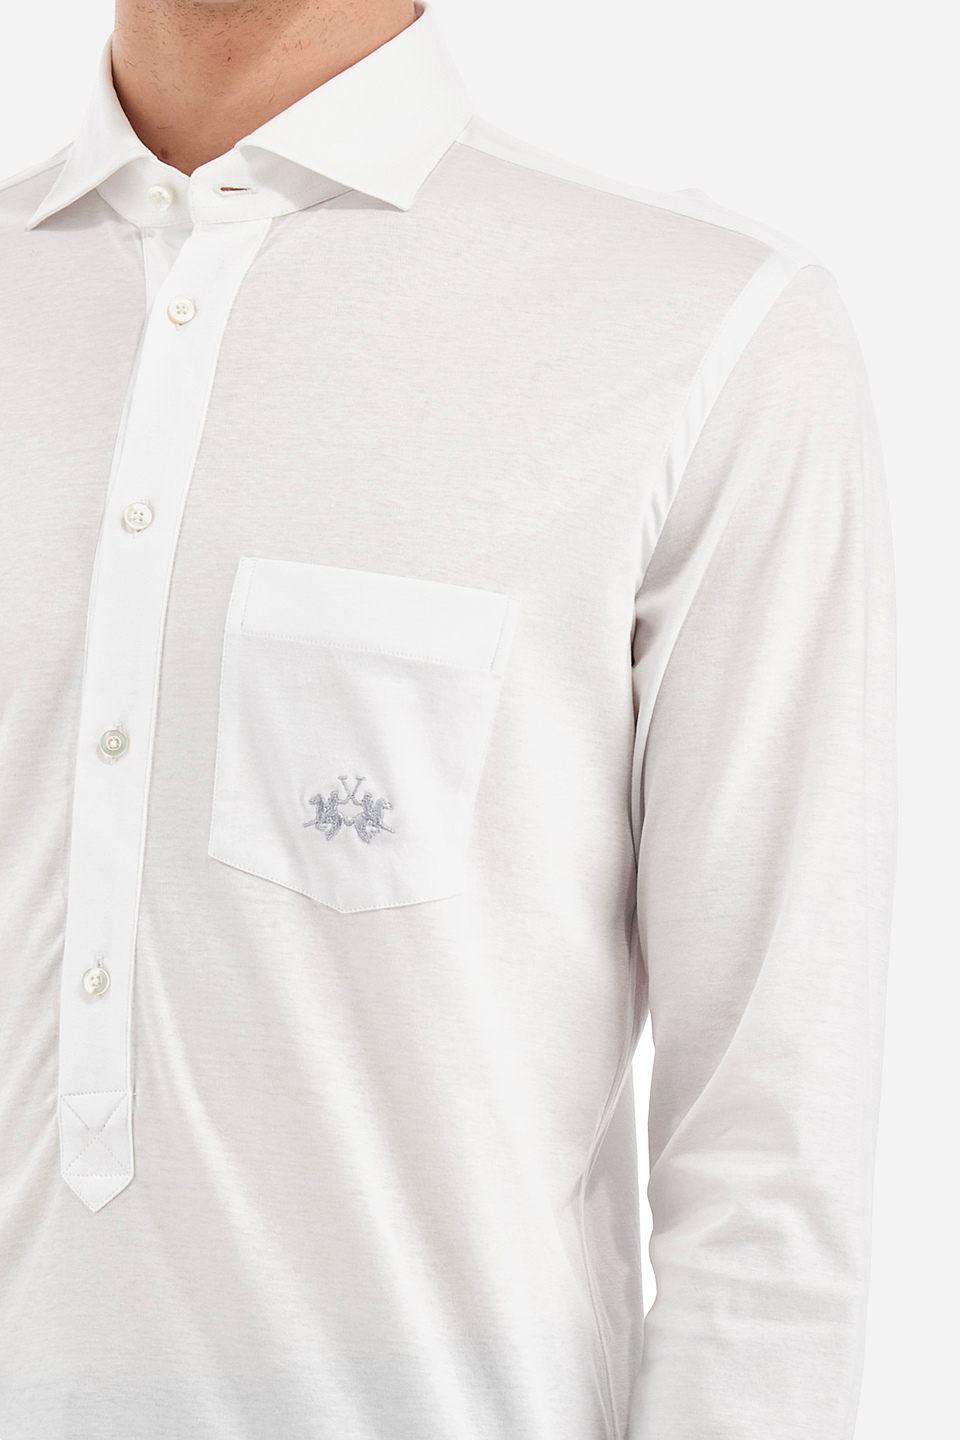 Camicia uomo in cotone jersey maniche lunghe custom fit - Varden | La Martina - Official Online Shop